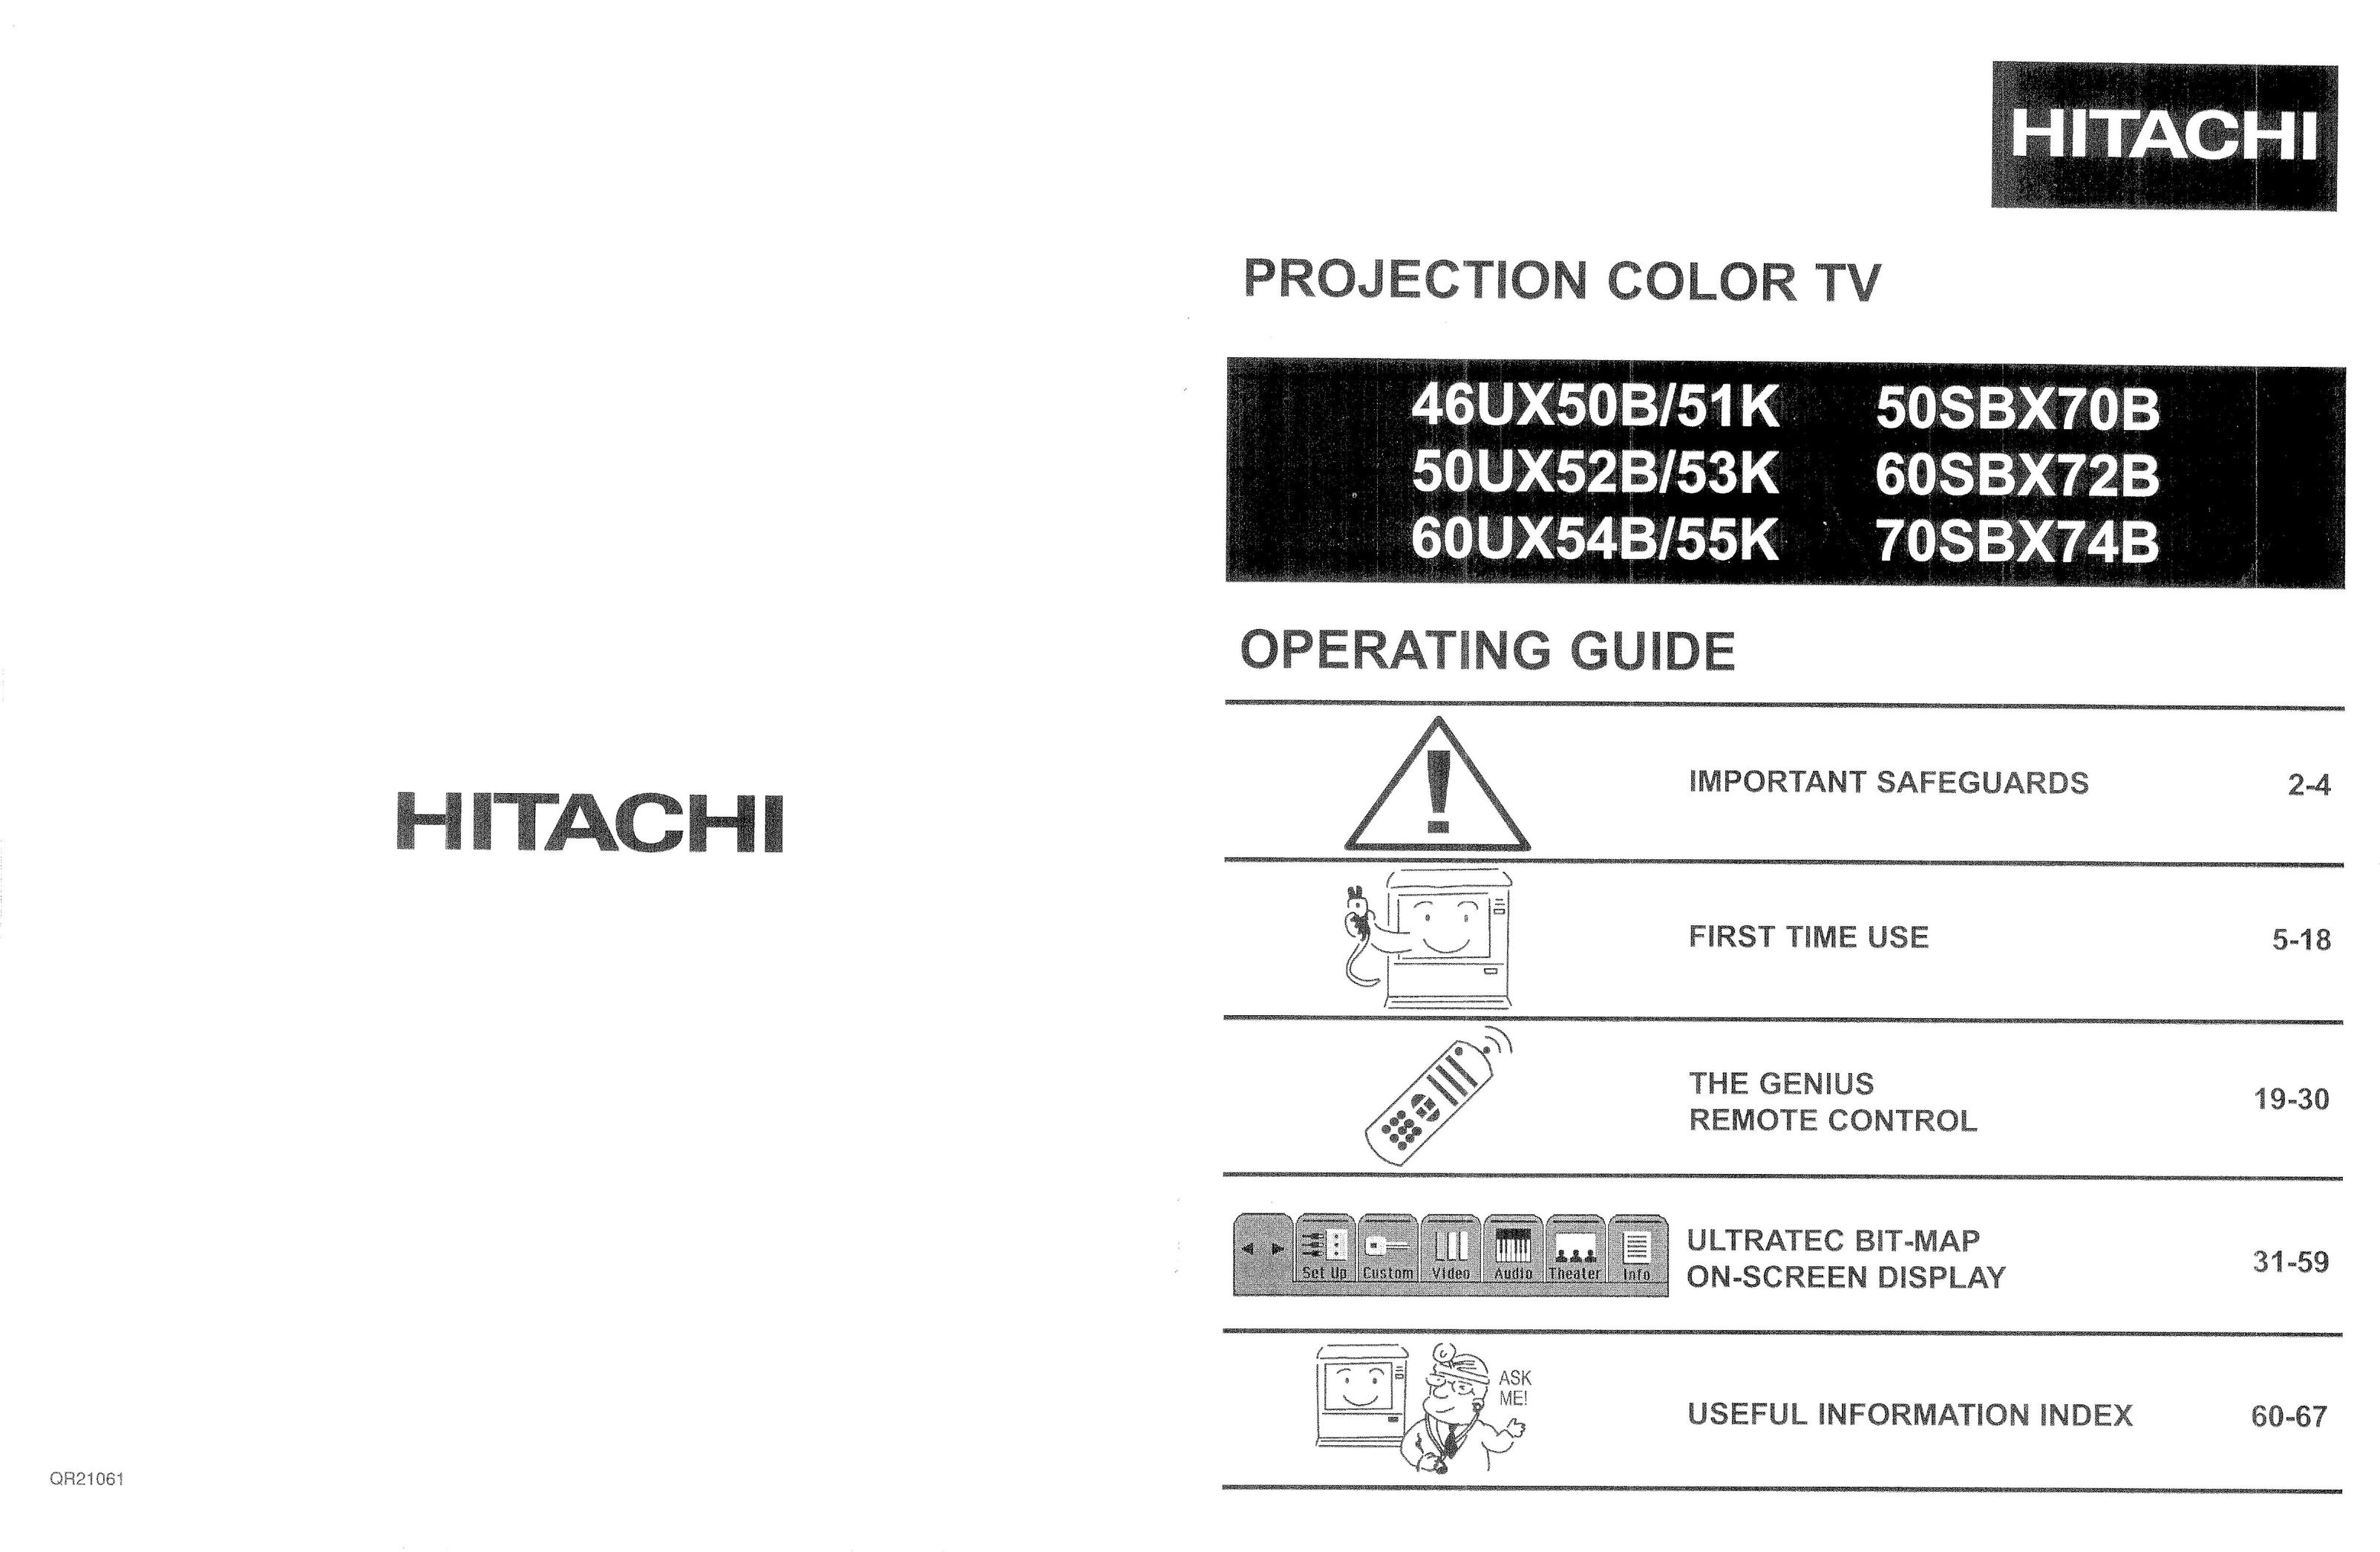 Hitachi 60UX54B/55K CRT Television User Manual